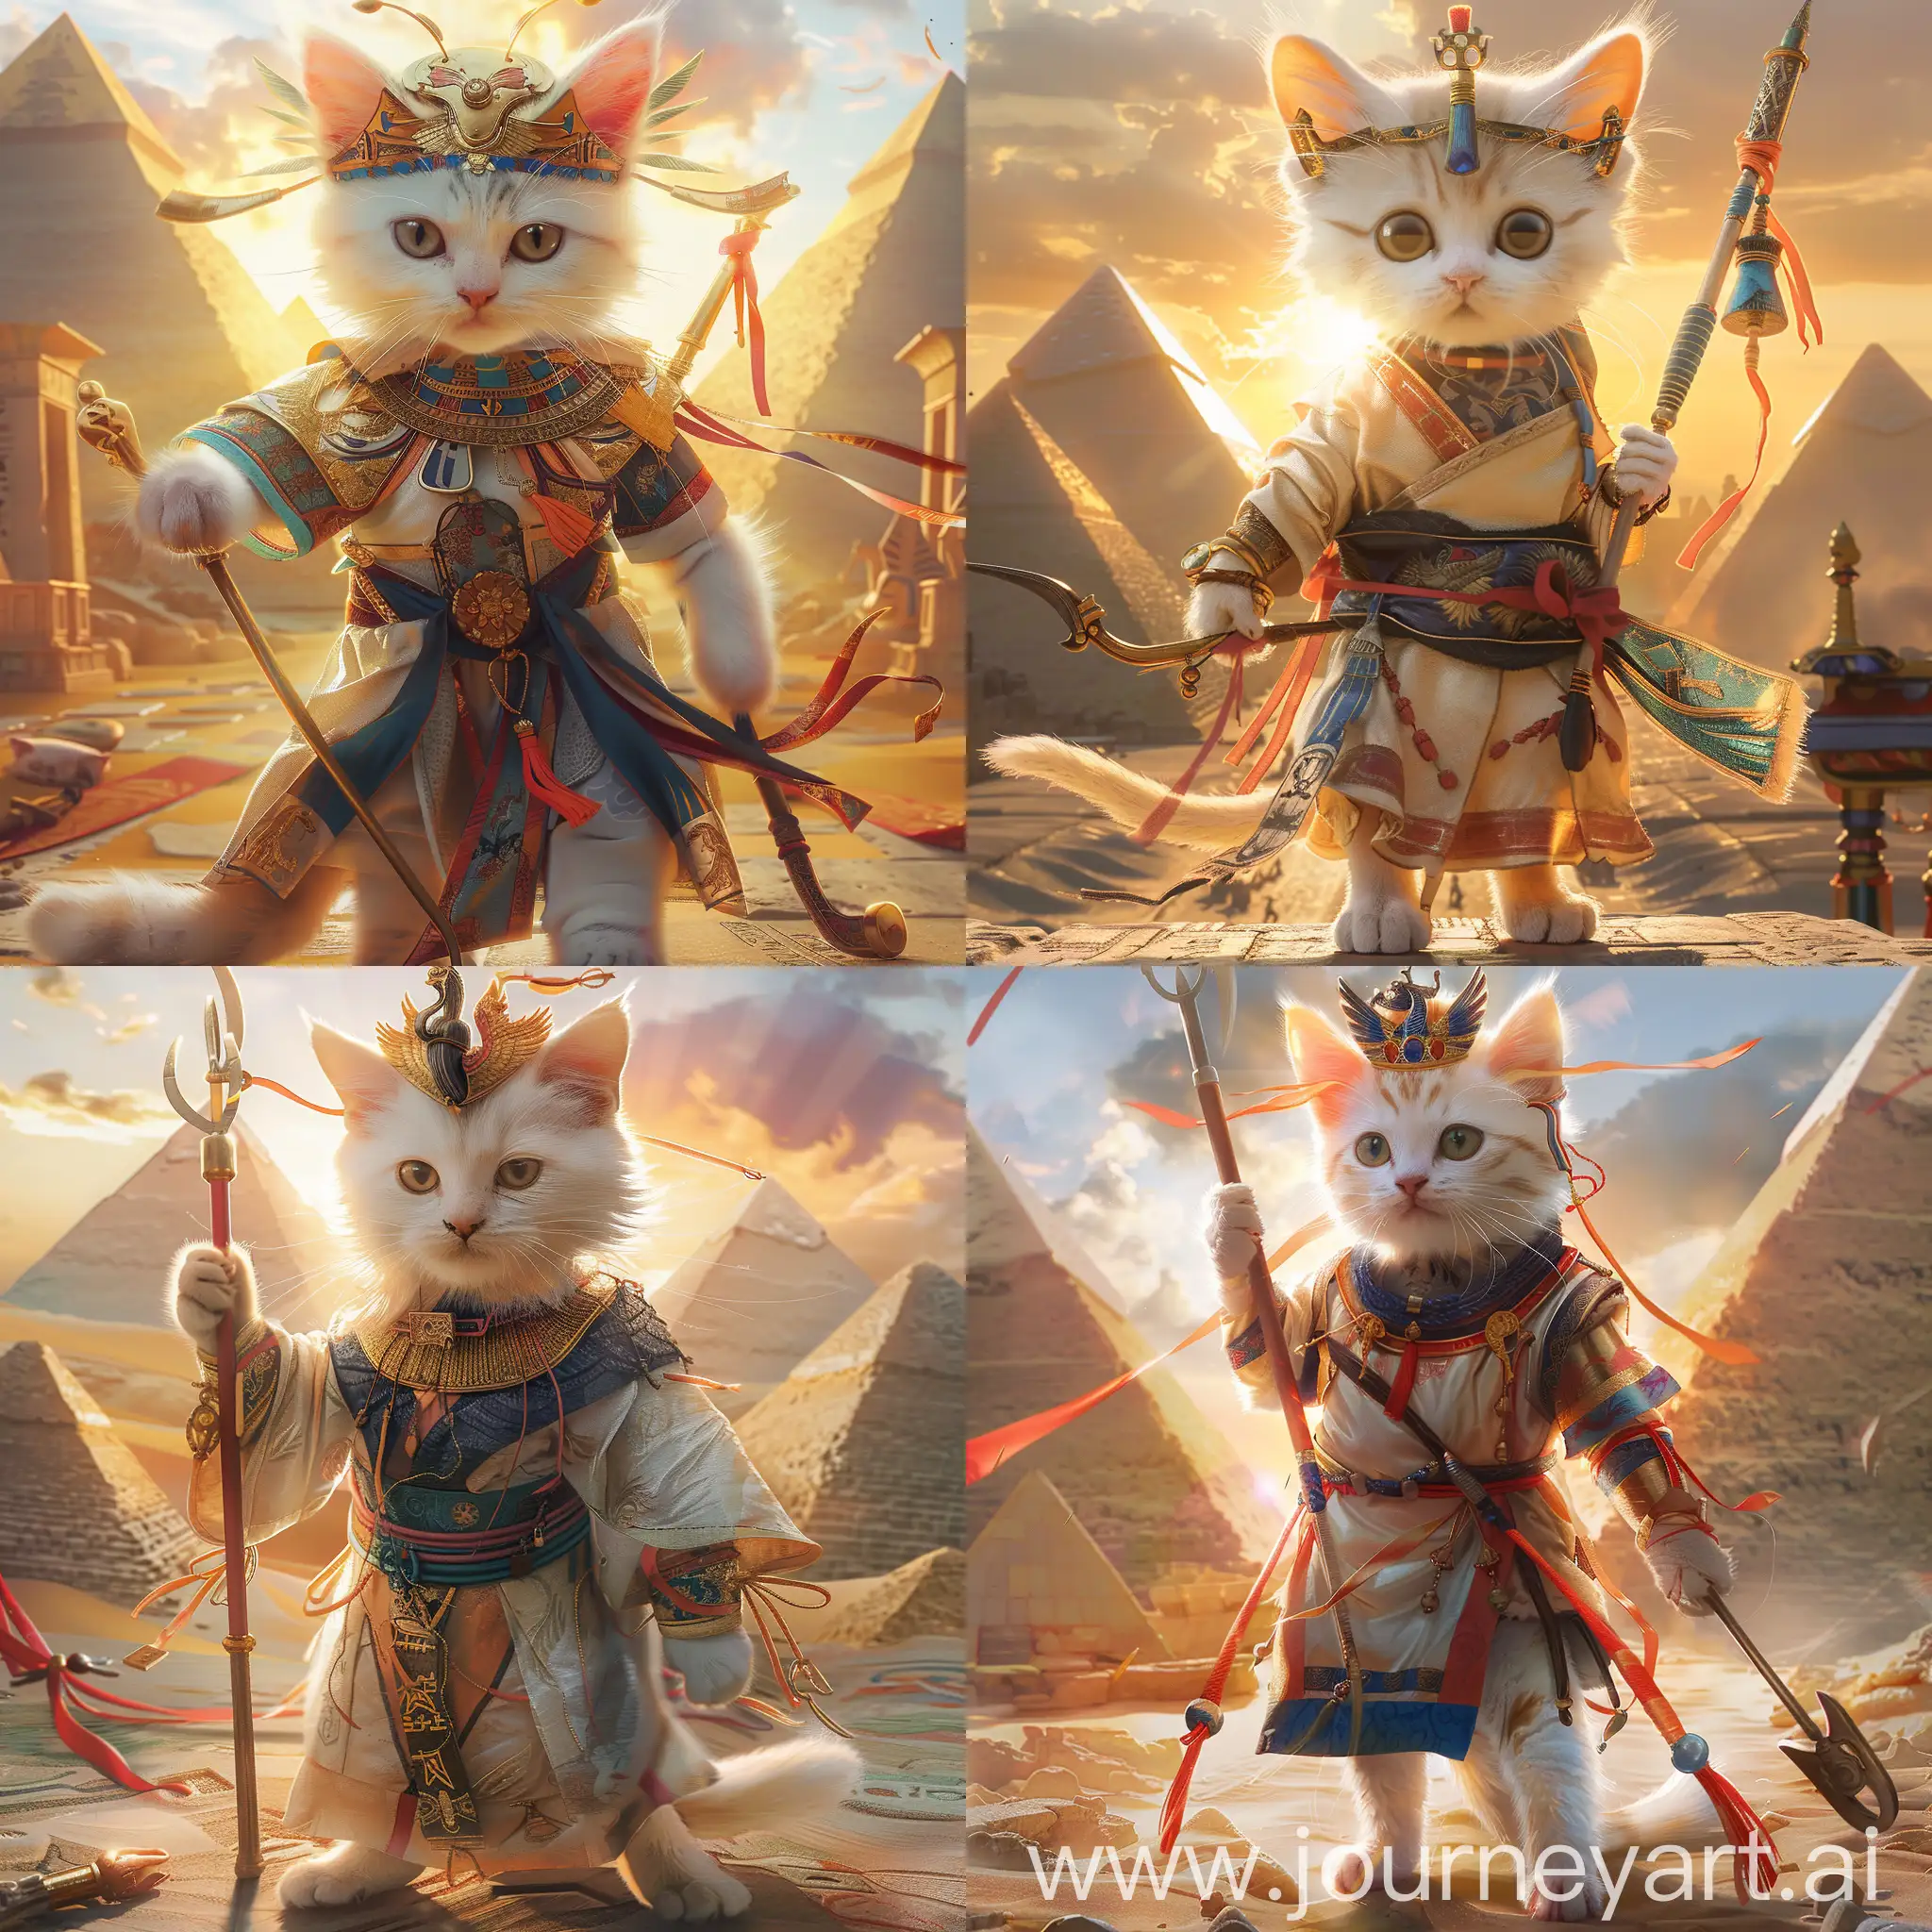 Adorable-White-Kitten-Transforms-into-Egyptian-Pharaoh-in-Tang-Dynasty-Attire